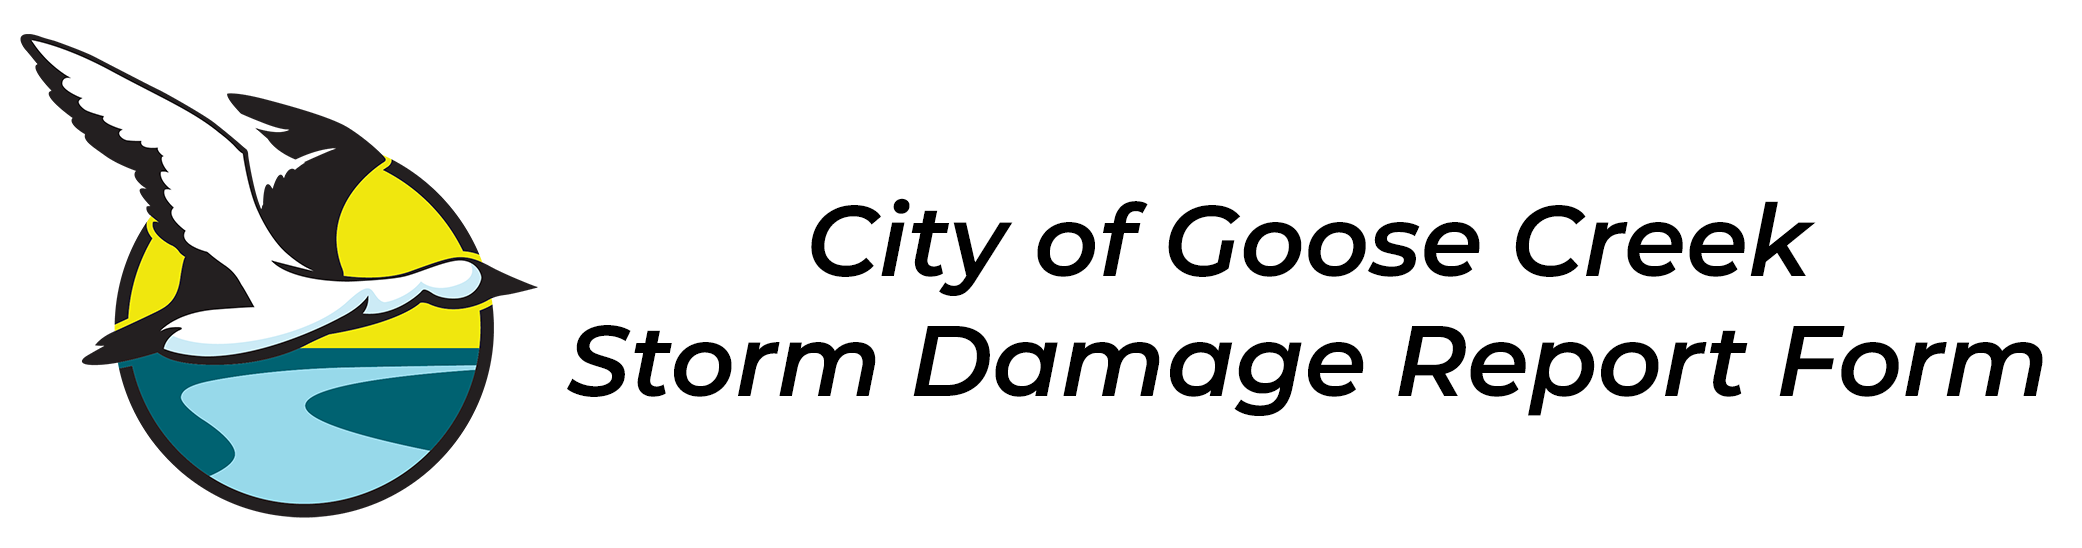 Storm Damage Report Form